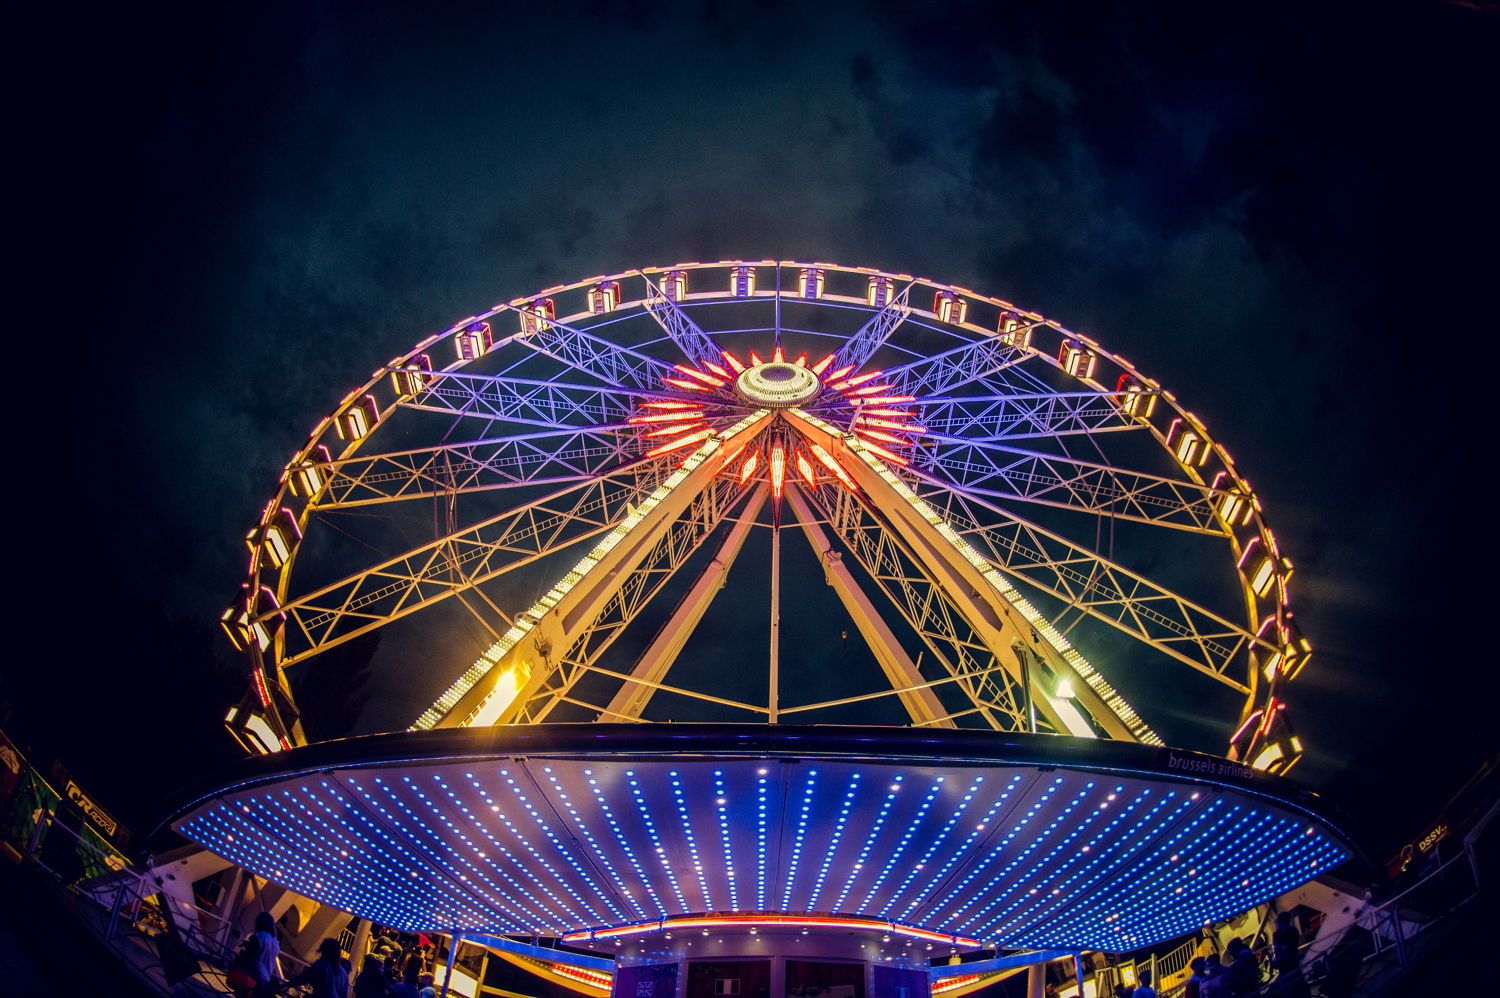 Cloud Rider TML - Brussels Airlines Ferris Wheel